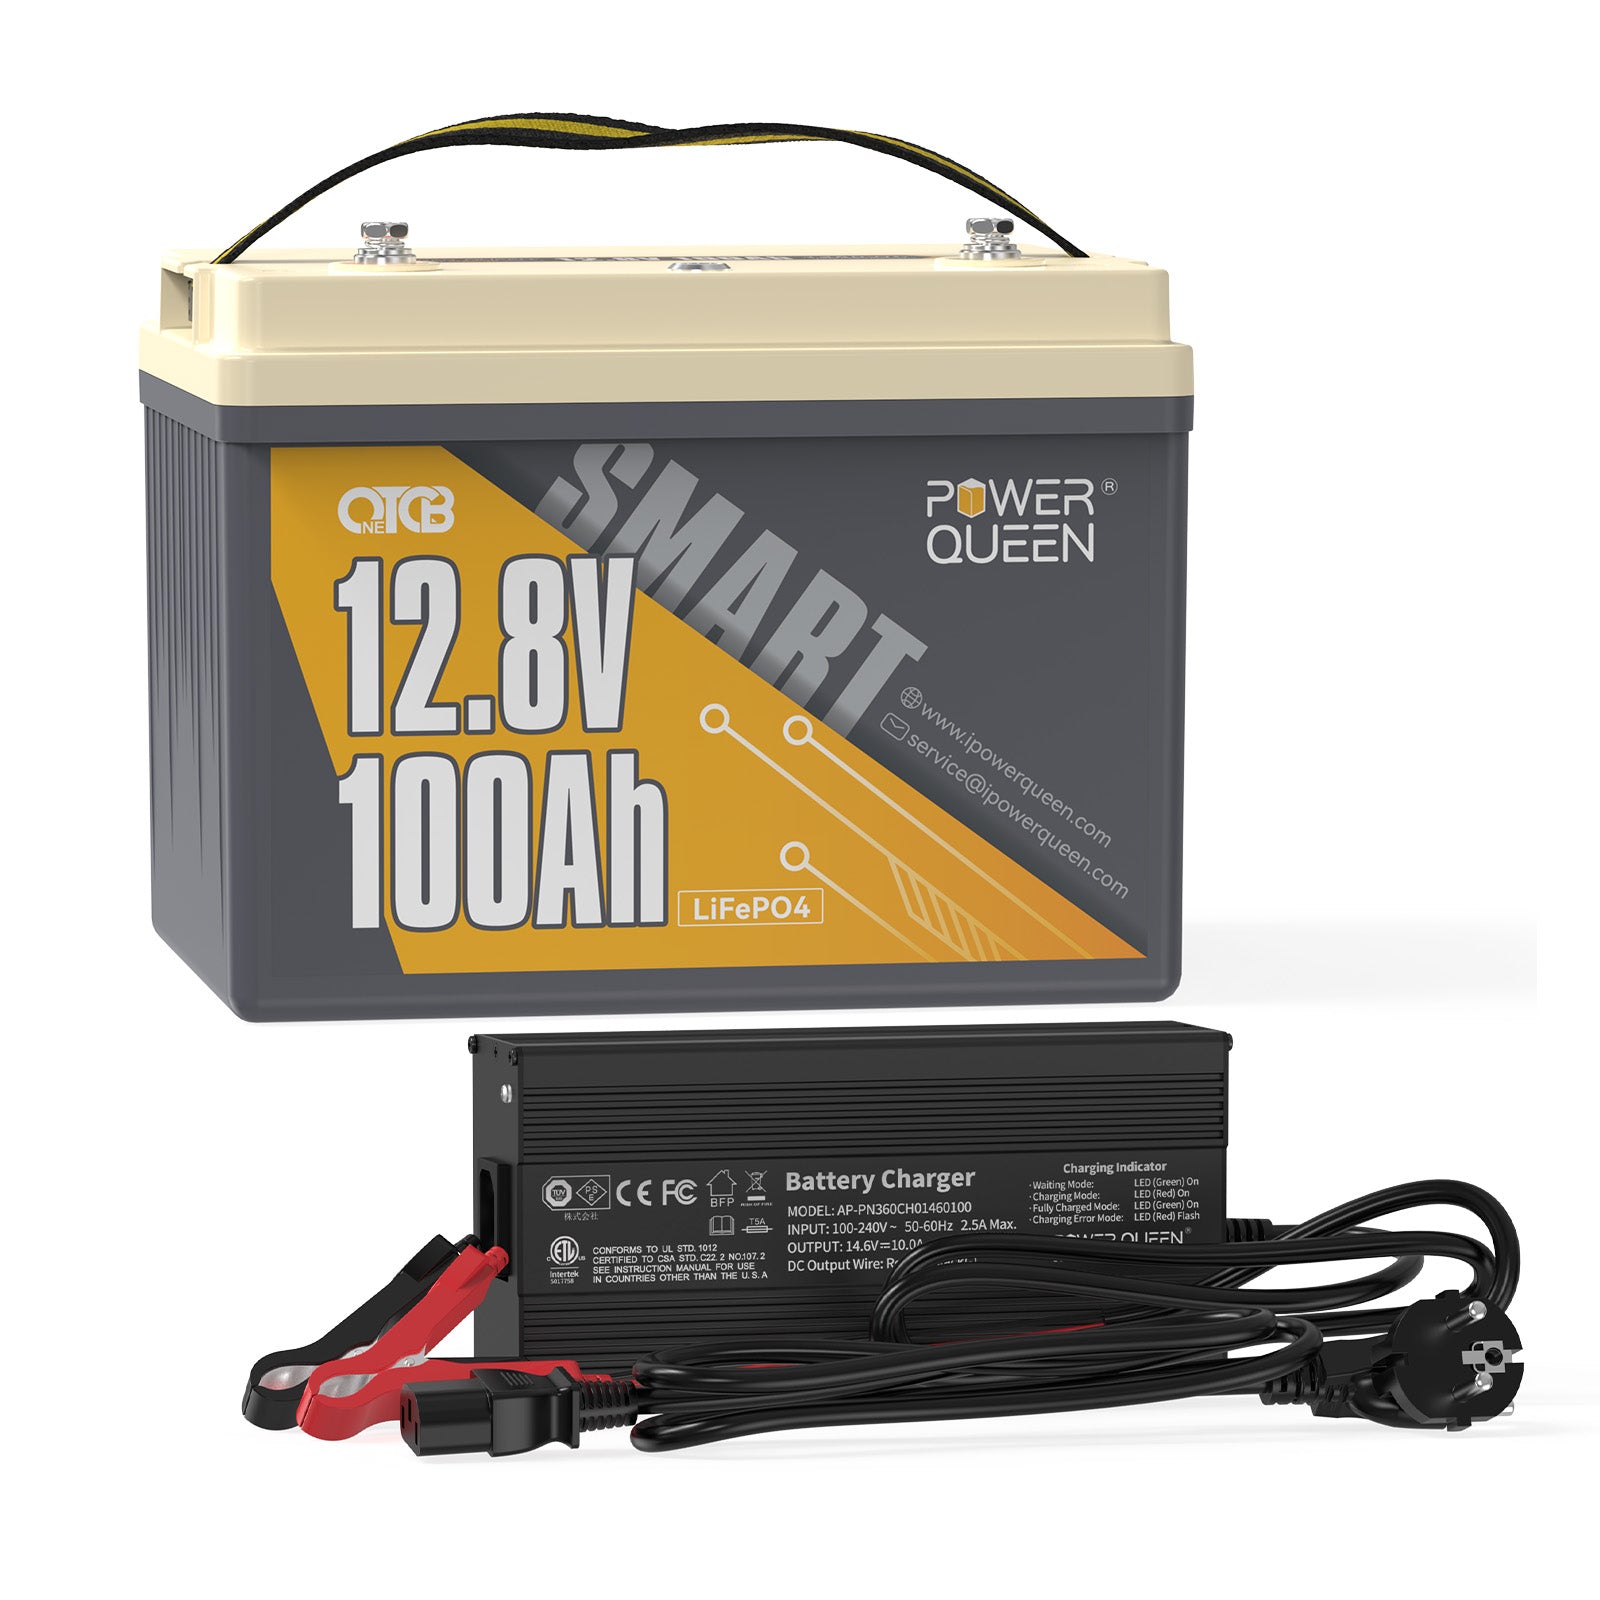 Batería OTCB LiFePO4 de baja temperatura Power Queen de 12 V y 100 Ah con BMS de 100 A incorporado